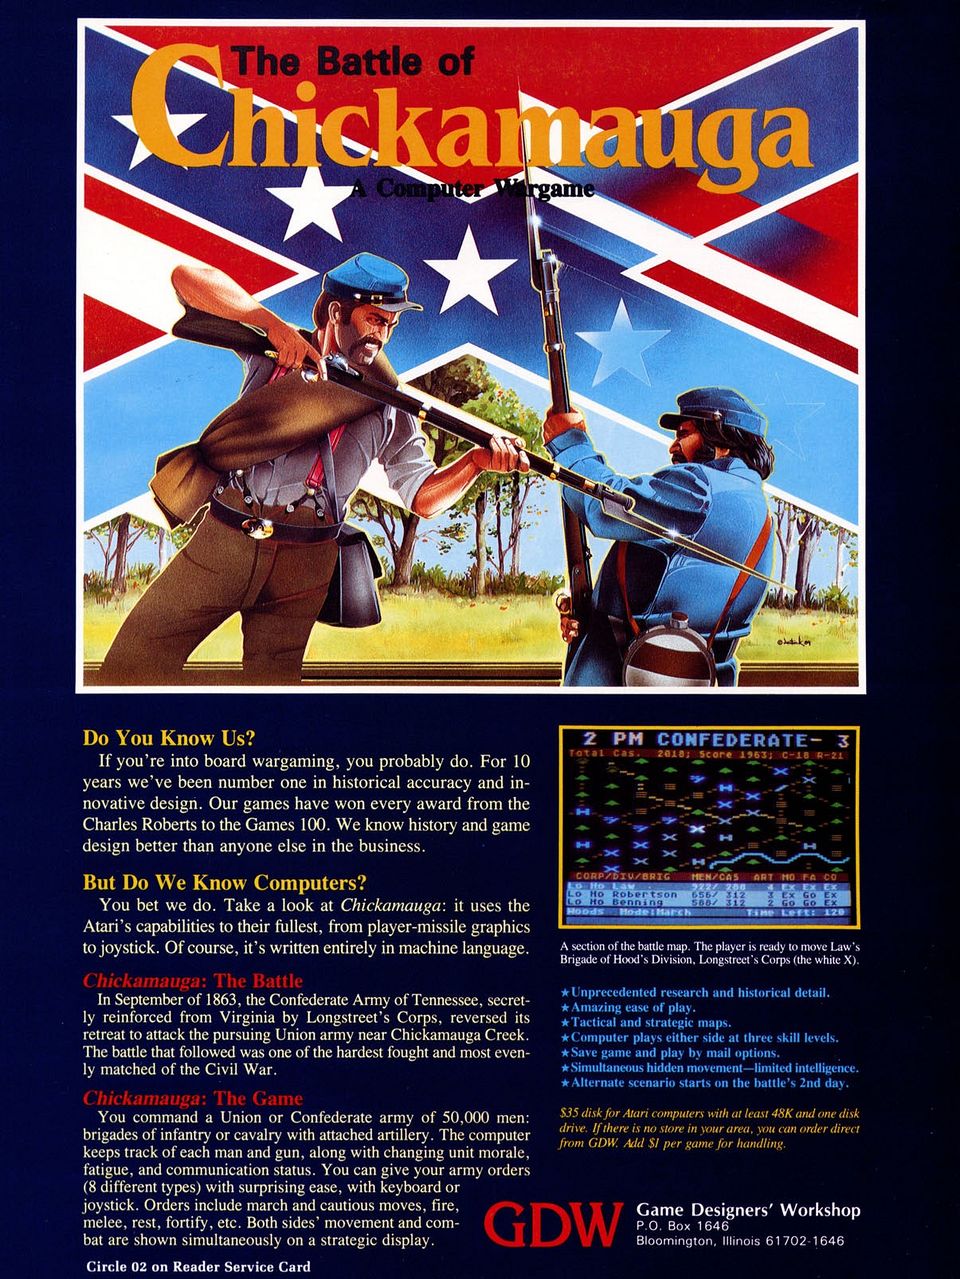 Ads: GDW - The Battle of Chickamauga